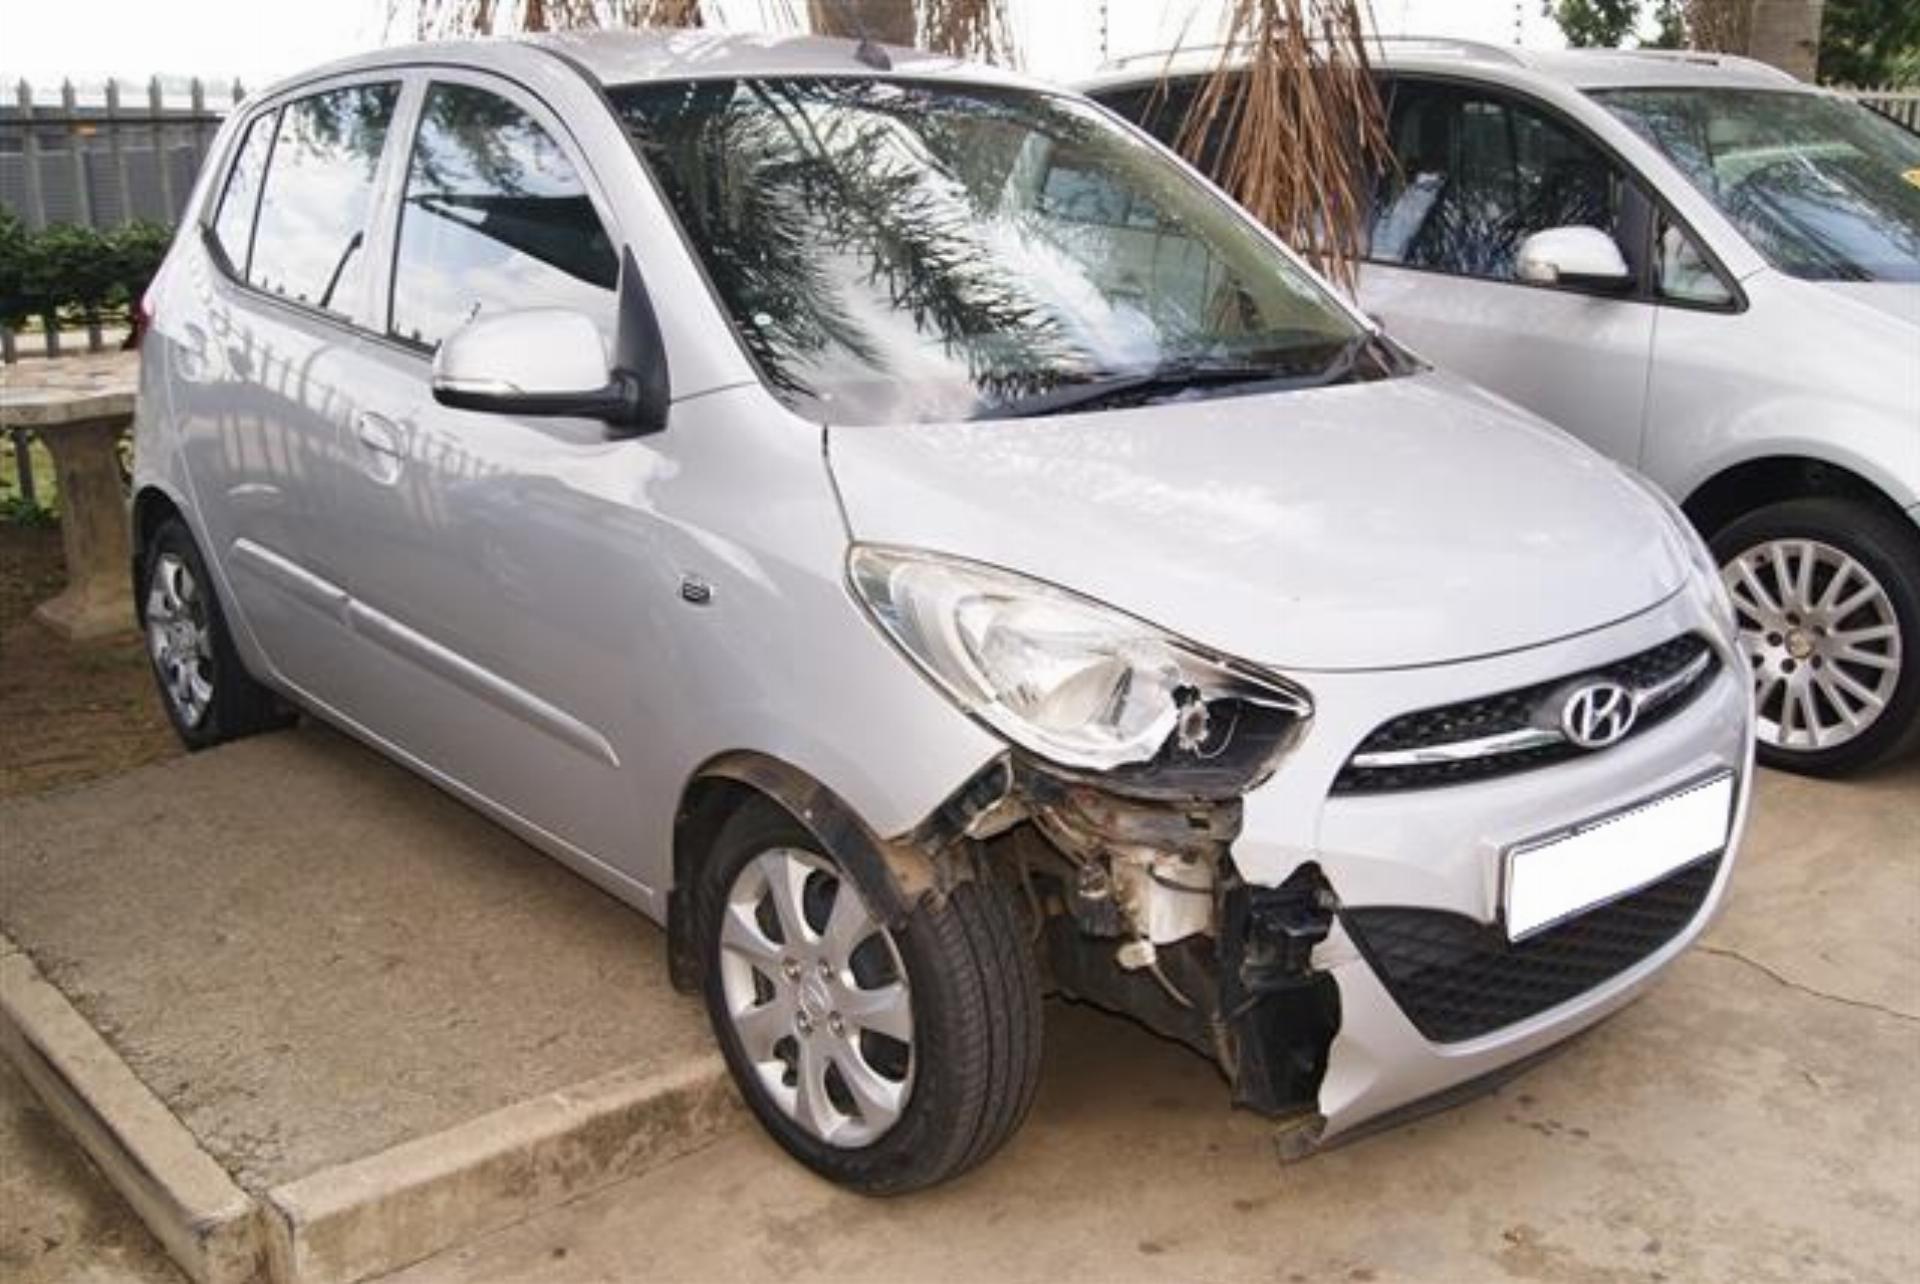 Repossessed Hyundai I10 1.1 GLS Motion 2015 on auction